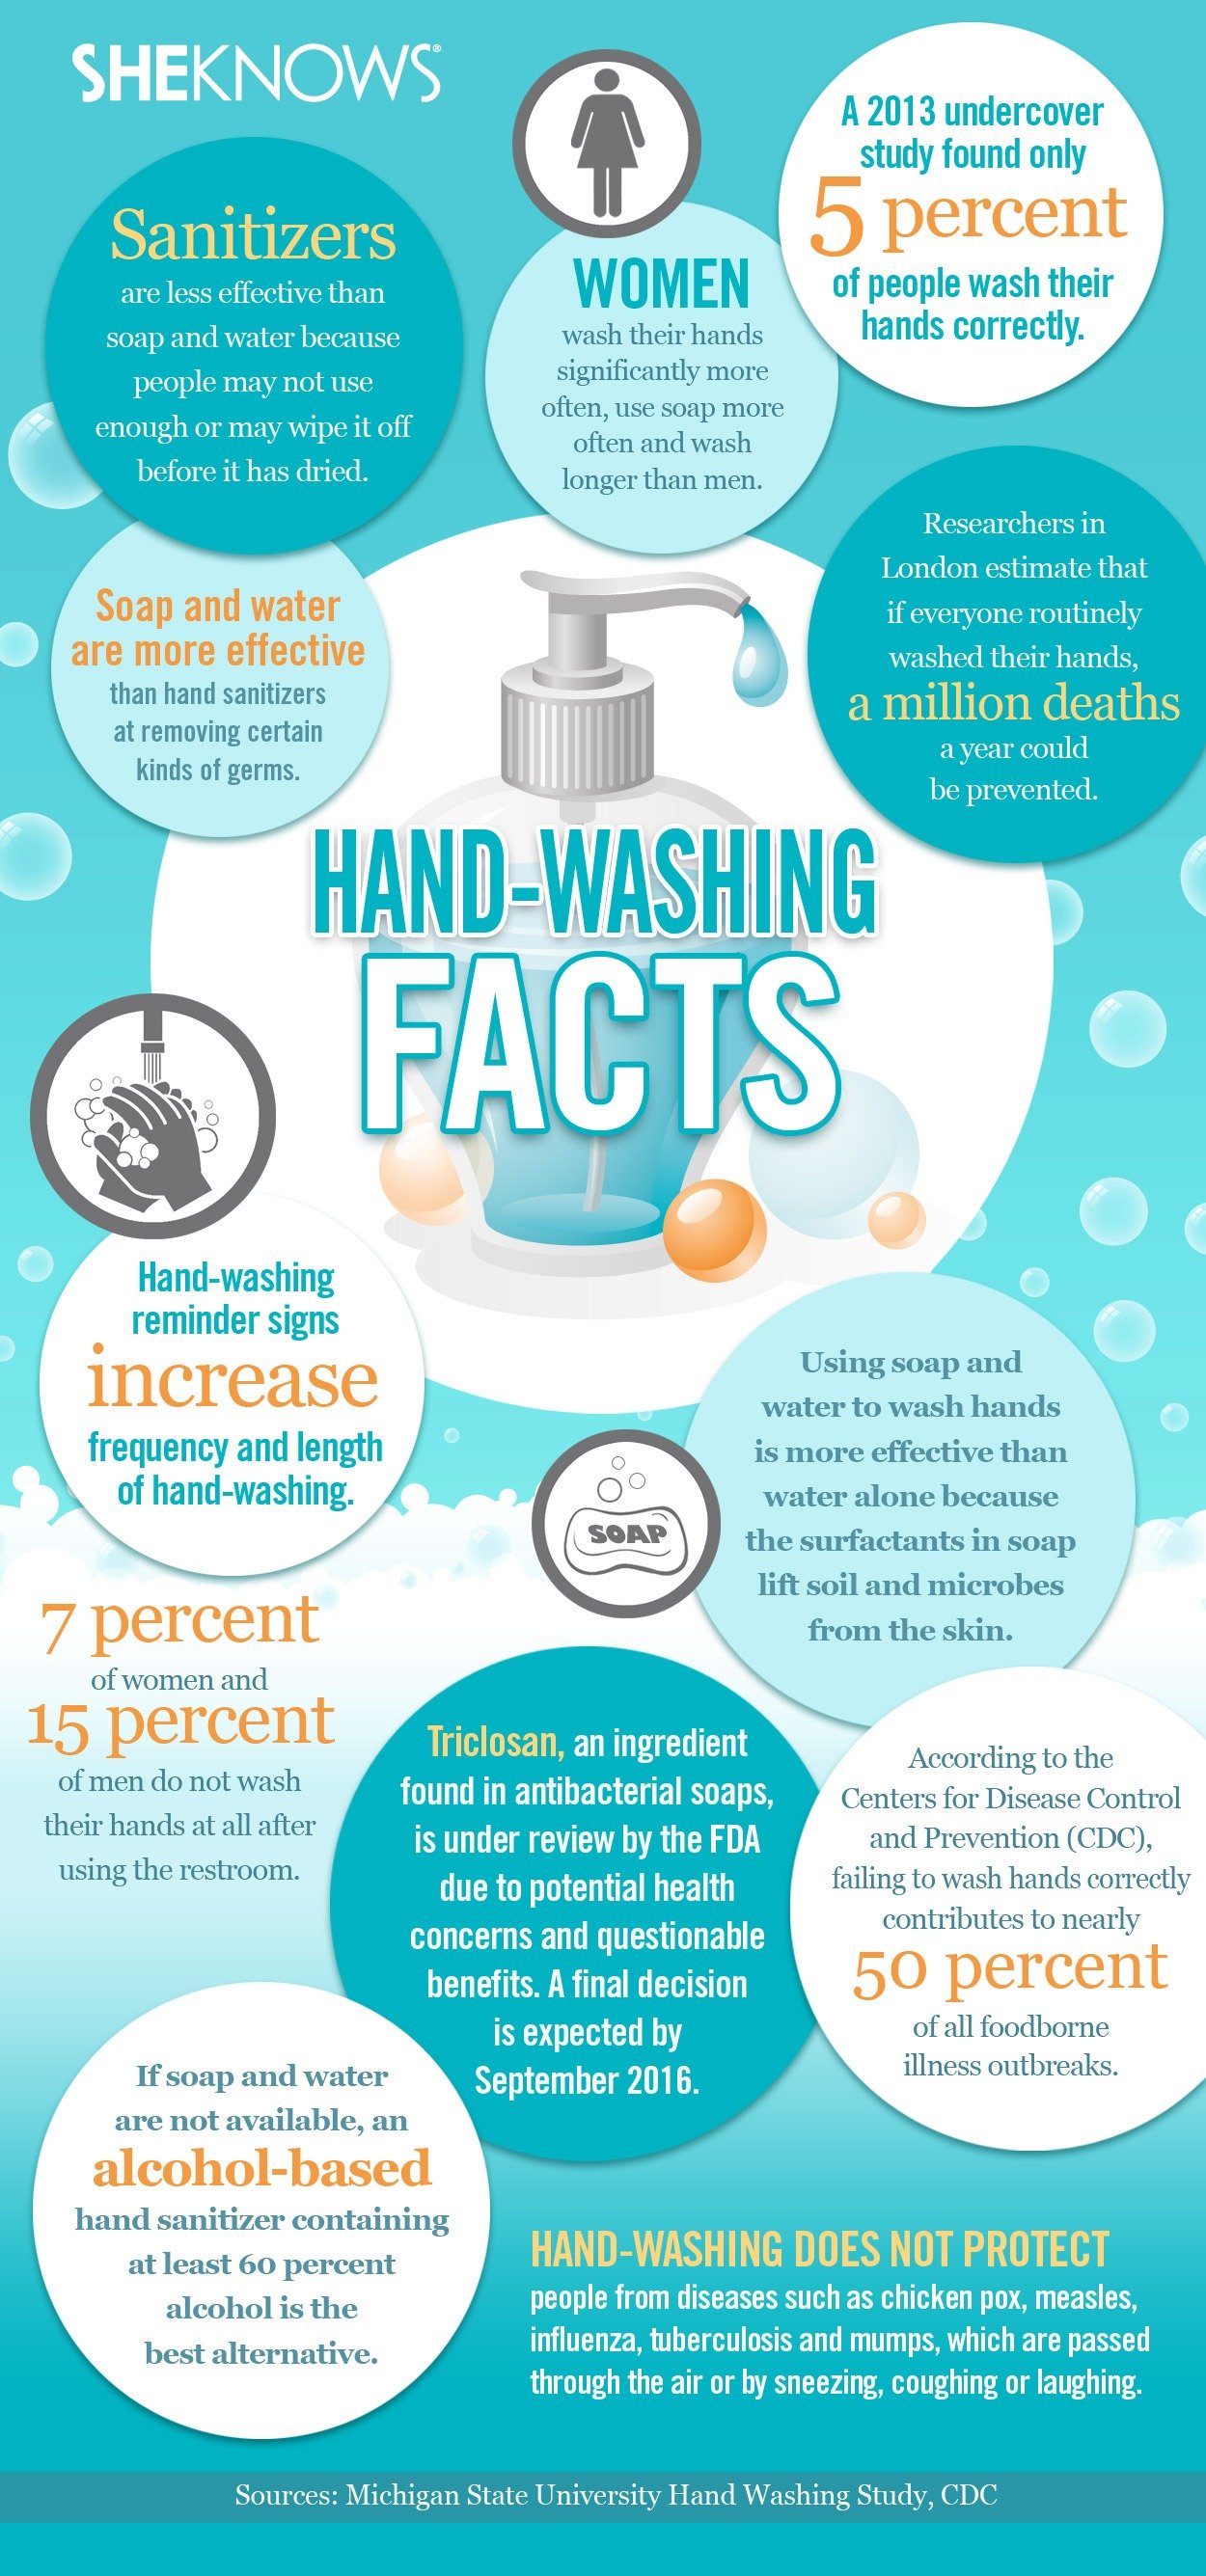 Hand washing and hygiene